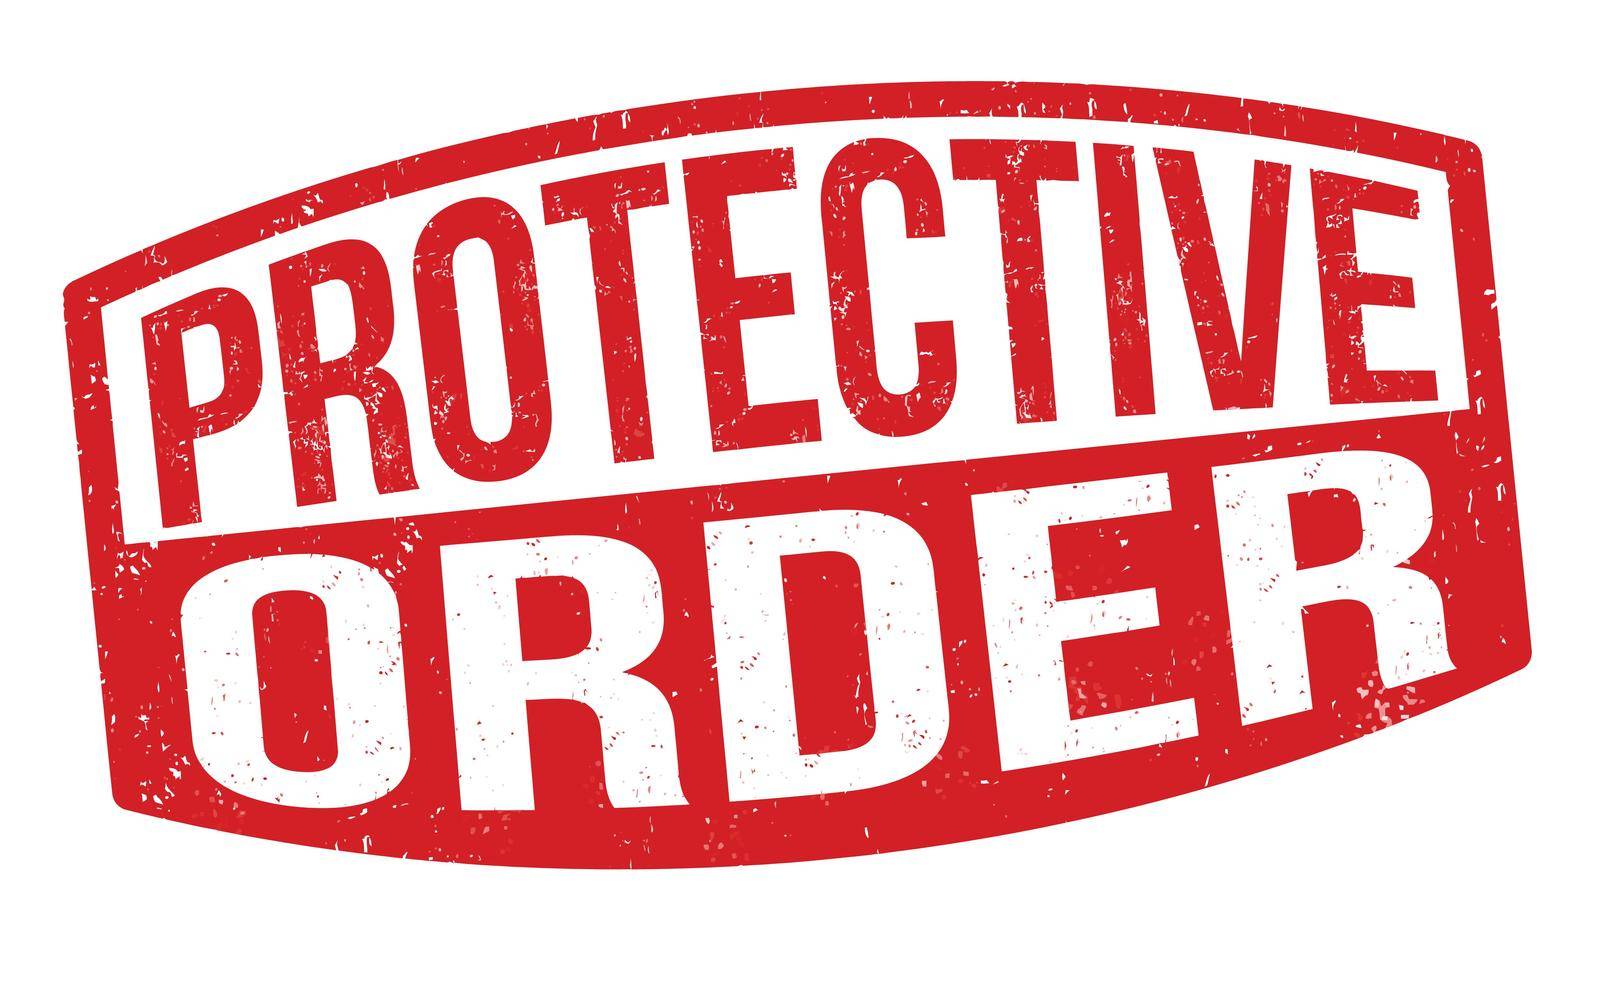 Protective order grunge rubber stamp on white background, vector illustration